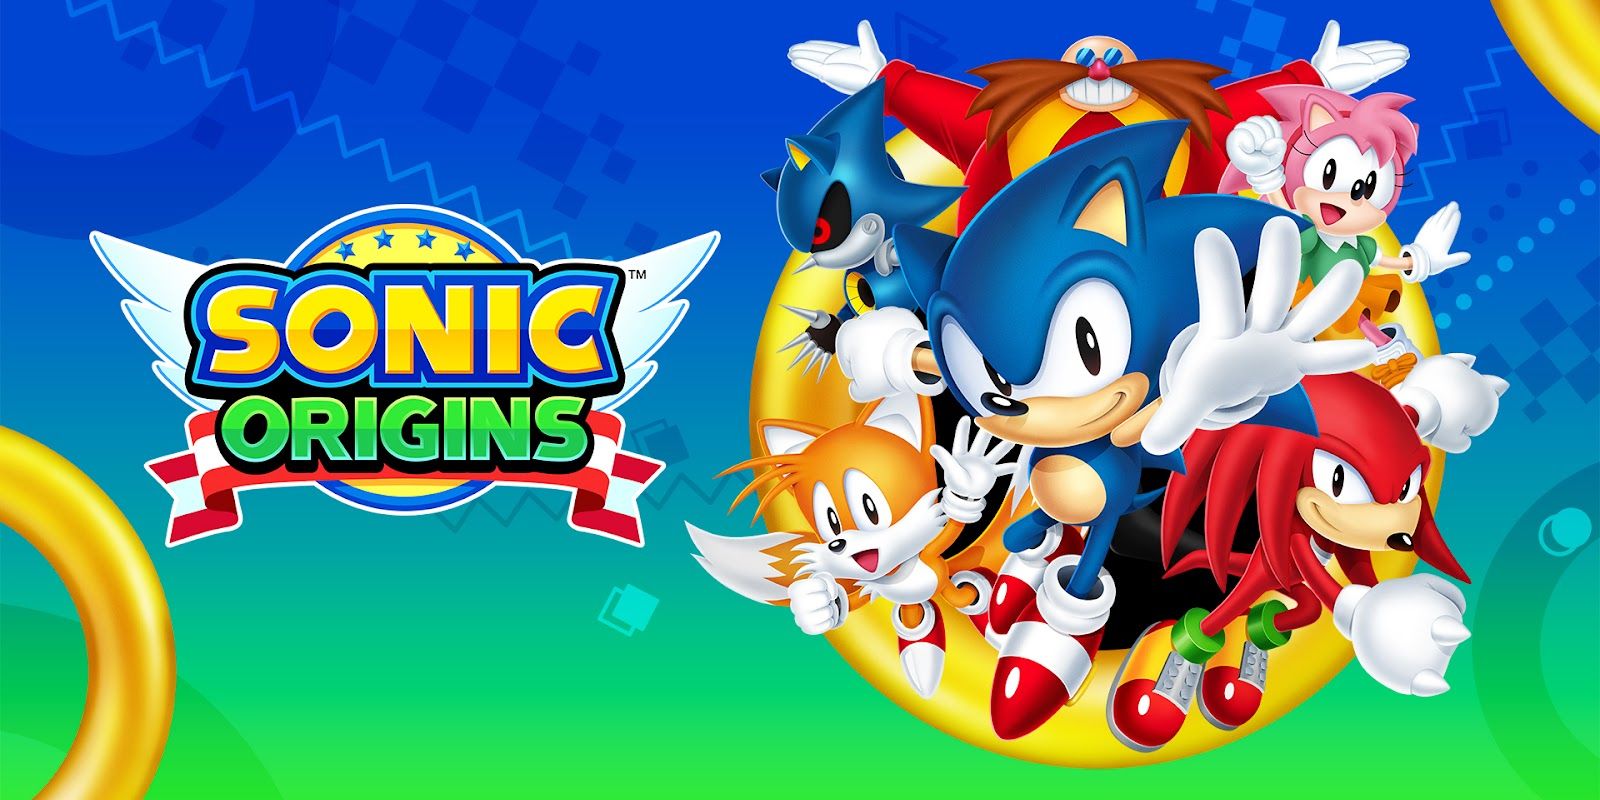 Sonic Origins is remastering four classic Sonic the Hedgehog games from the Sega Genesis/Mega Drive era